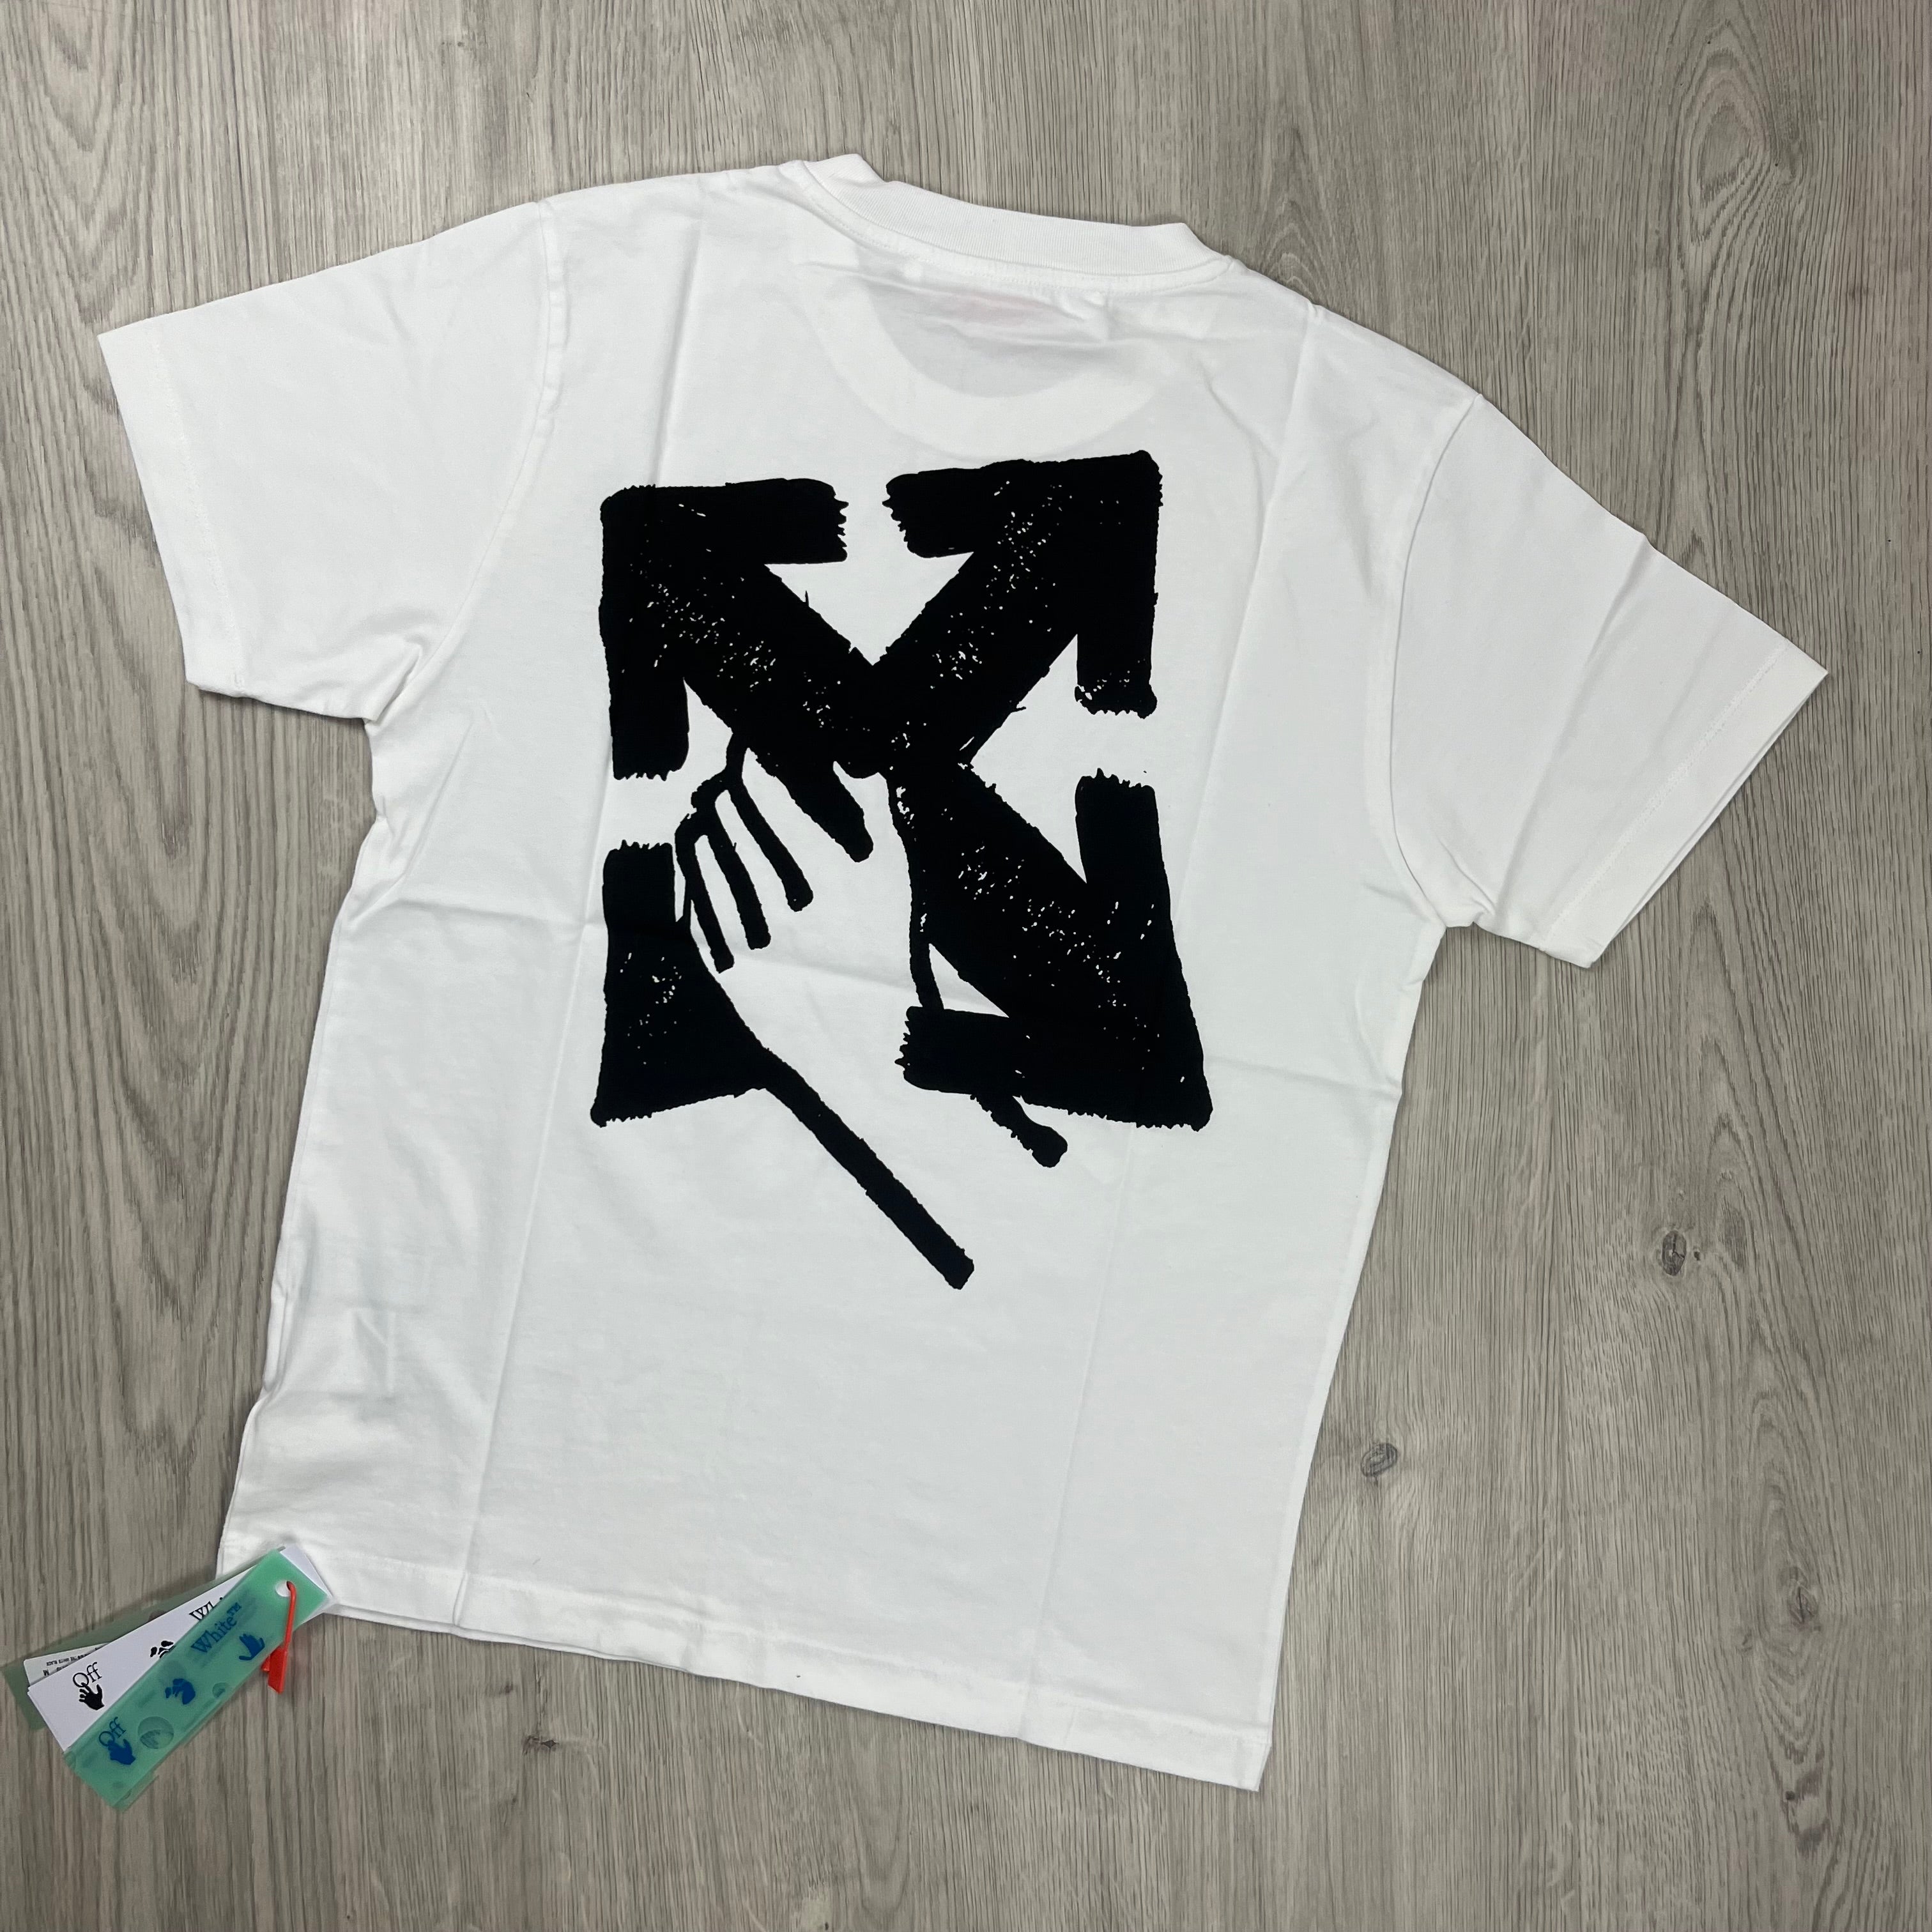 Off-White Hand T-Shirt